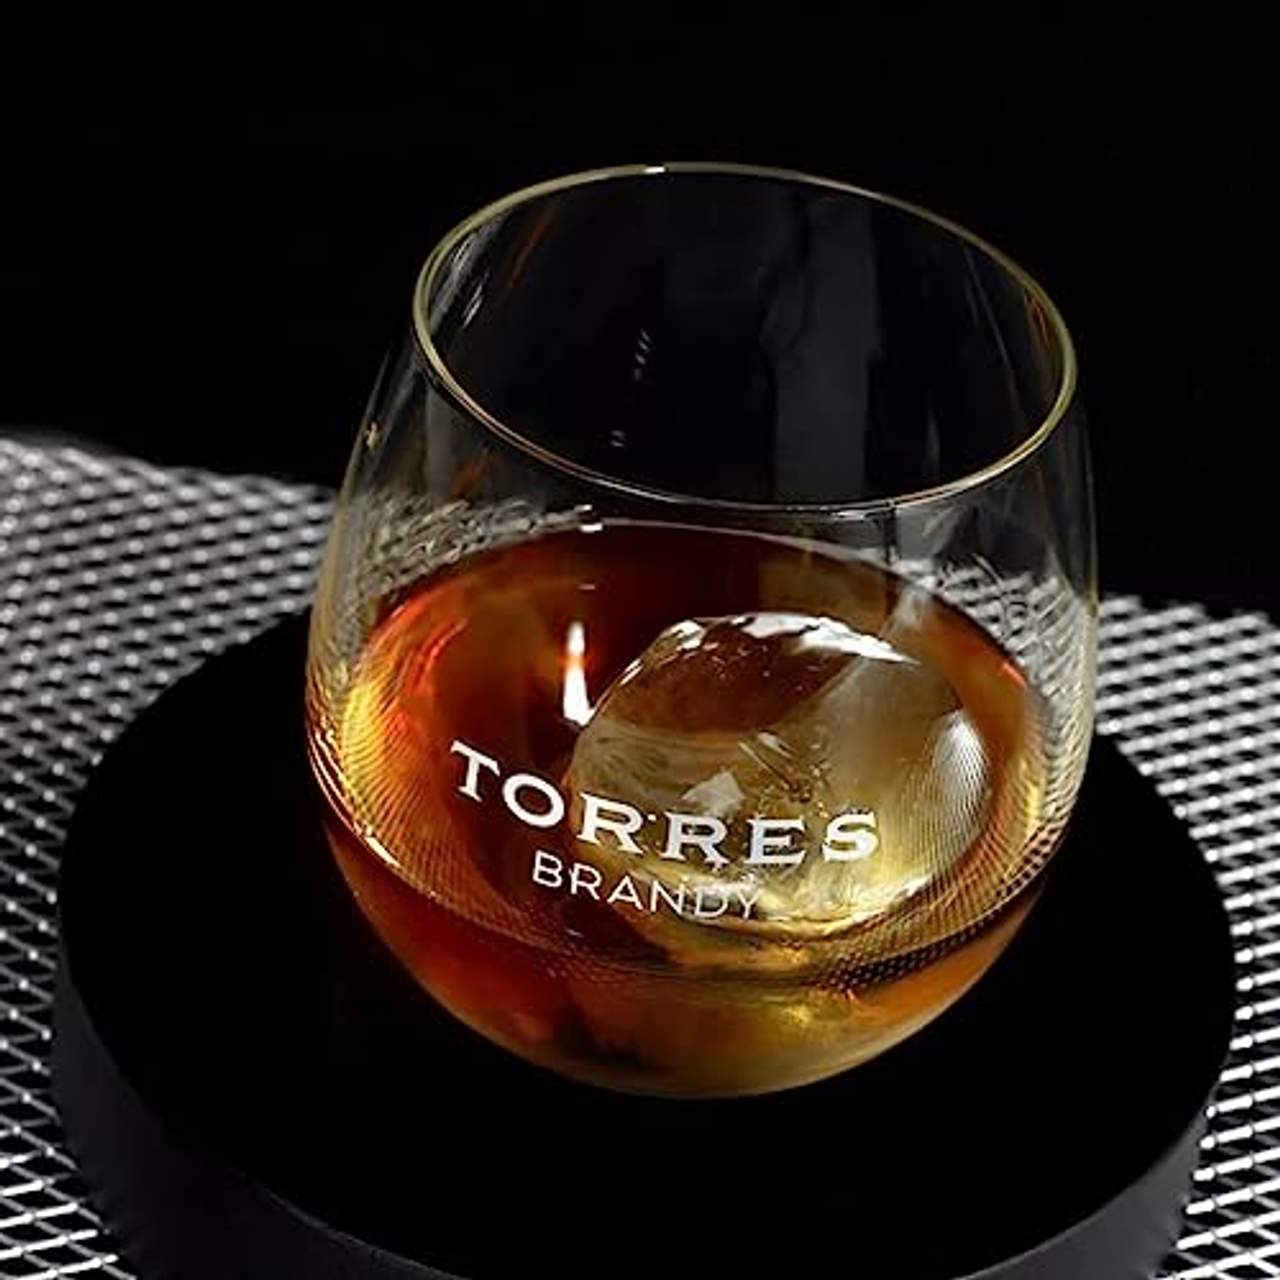 Torres Brandy 20 Superior Brandy Hors d'Age